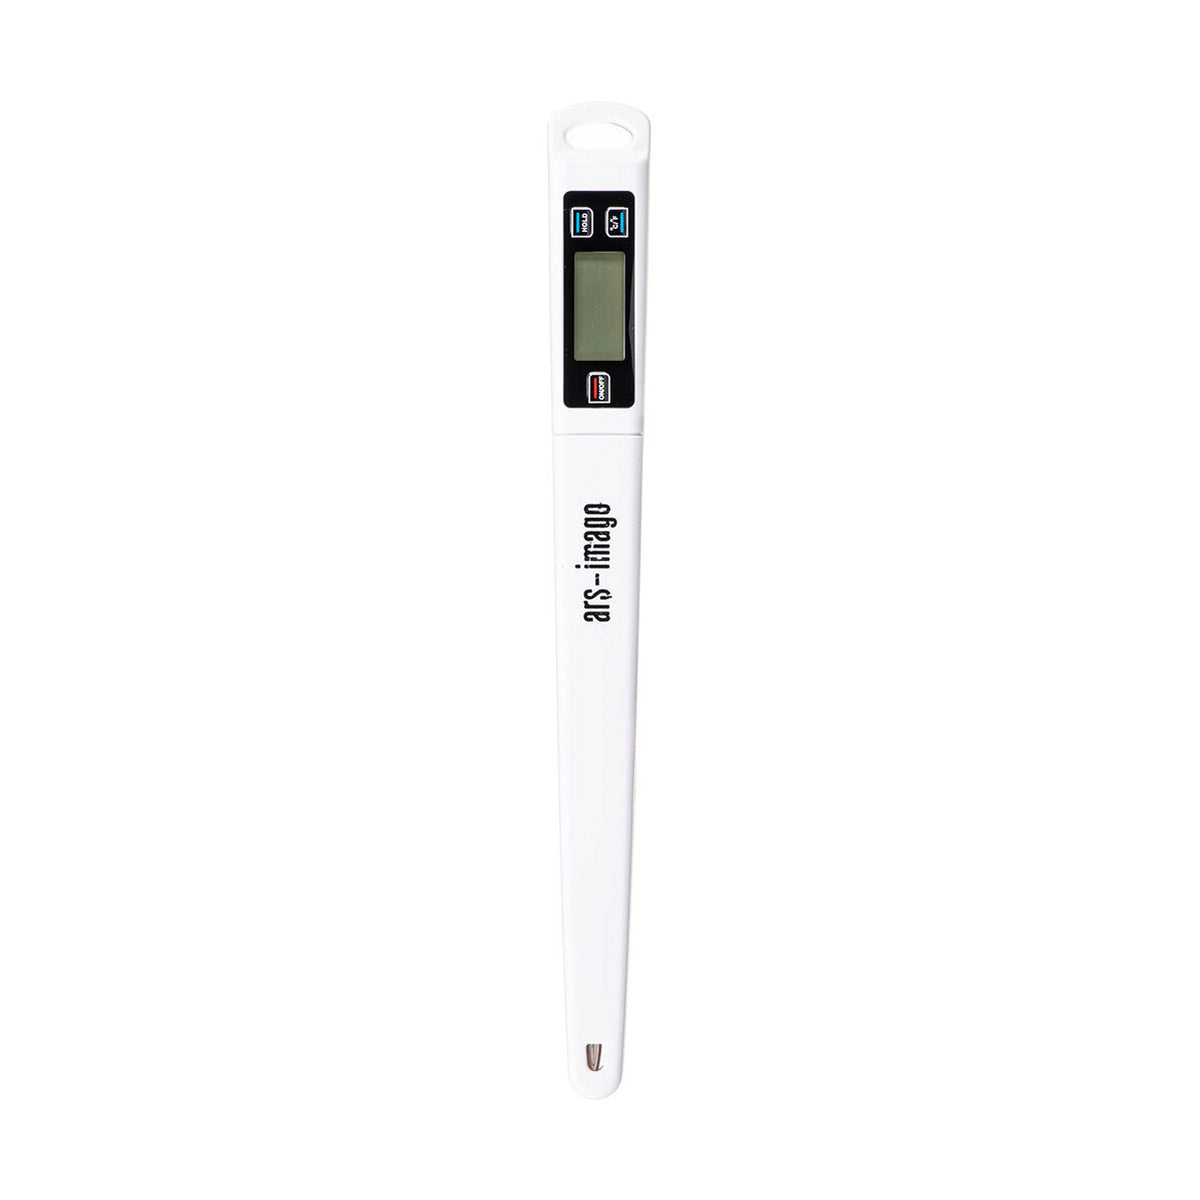 Ars-Imago Digital Thermometer